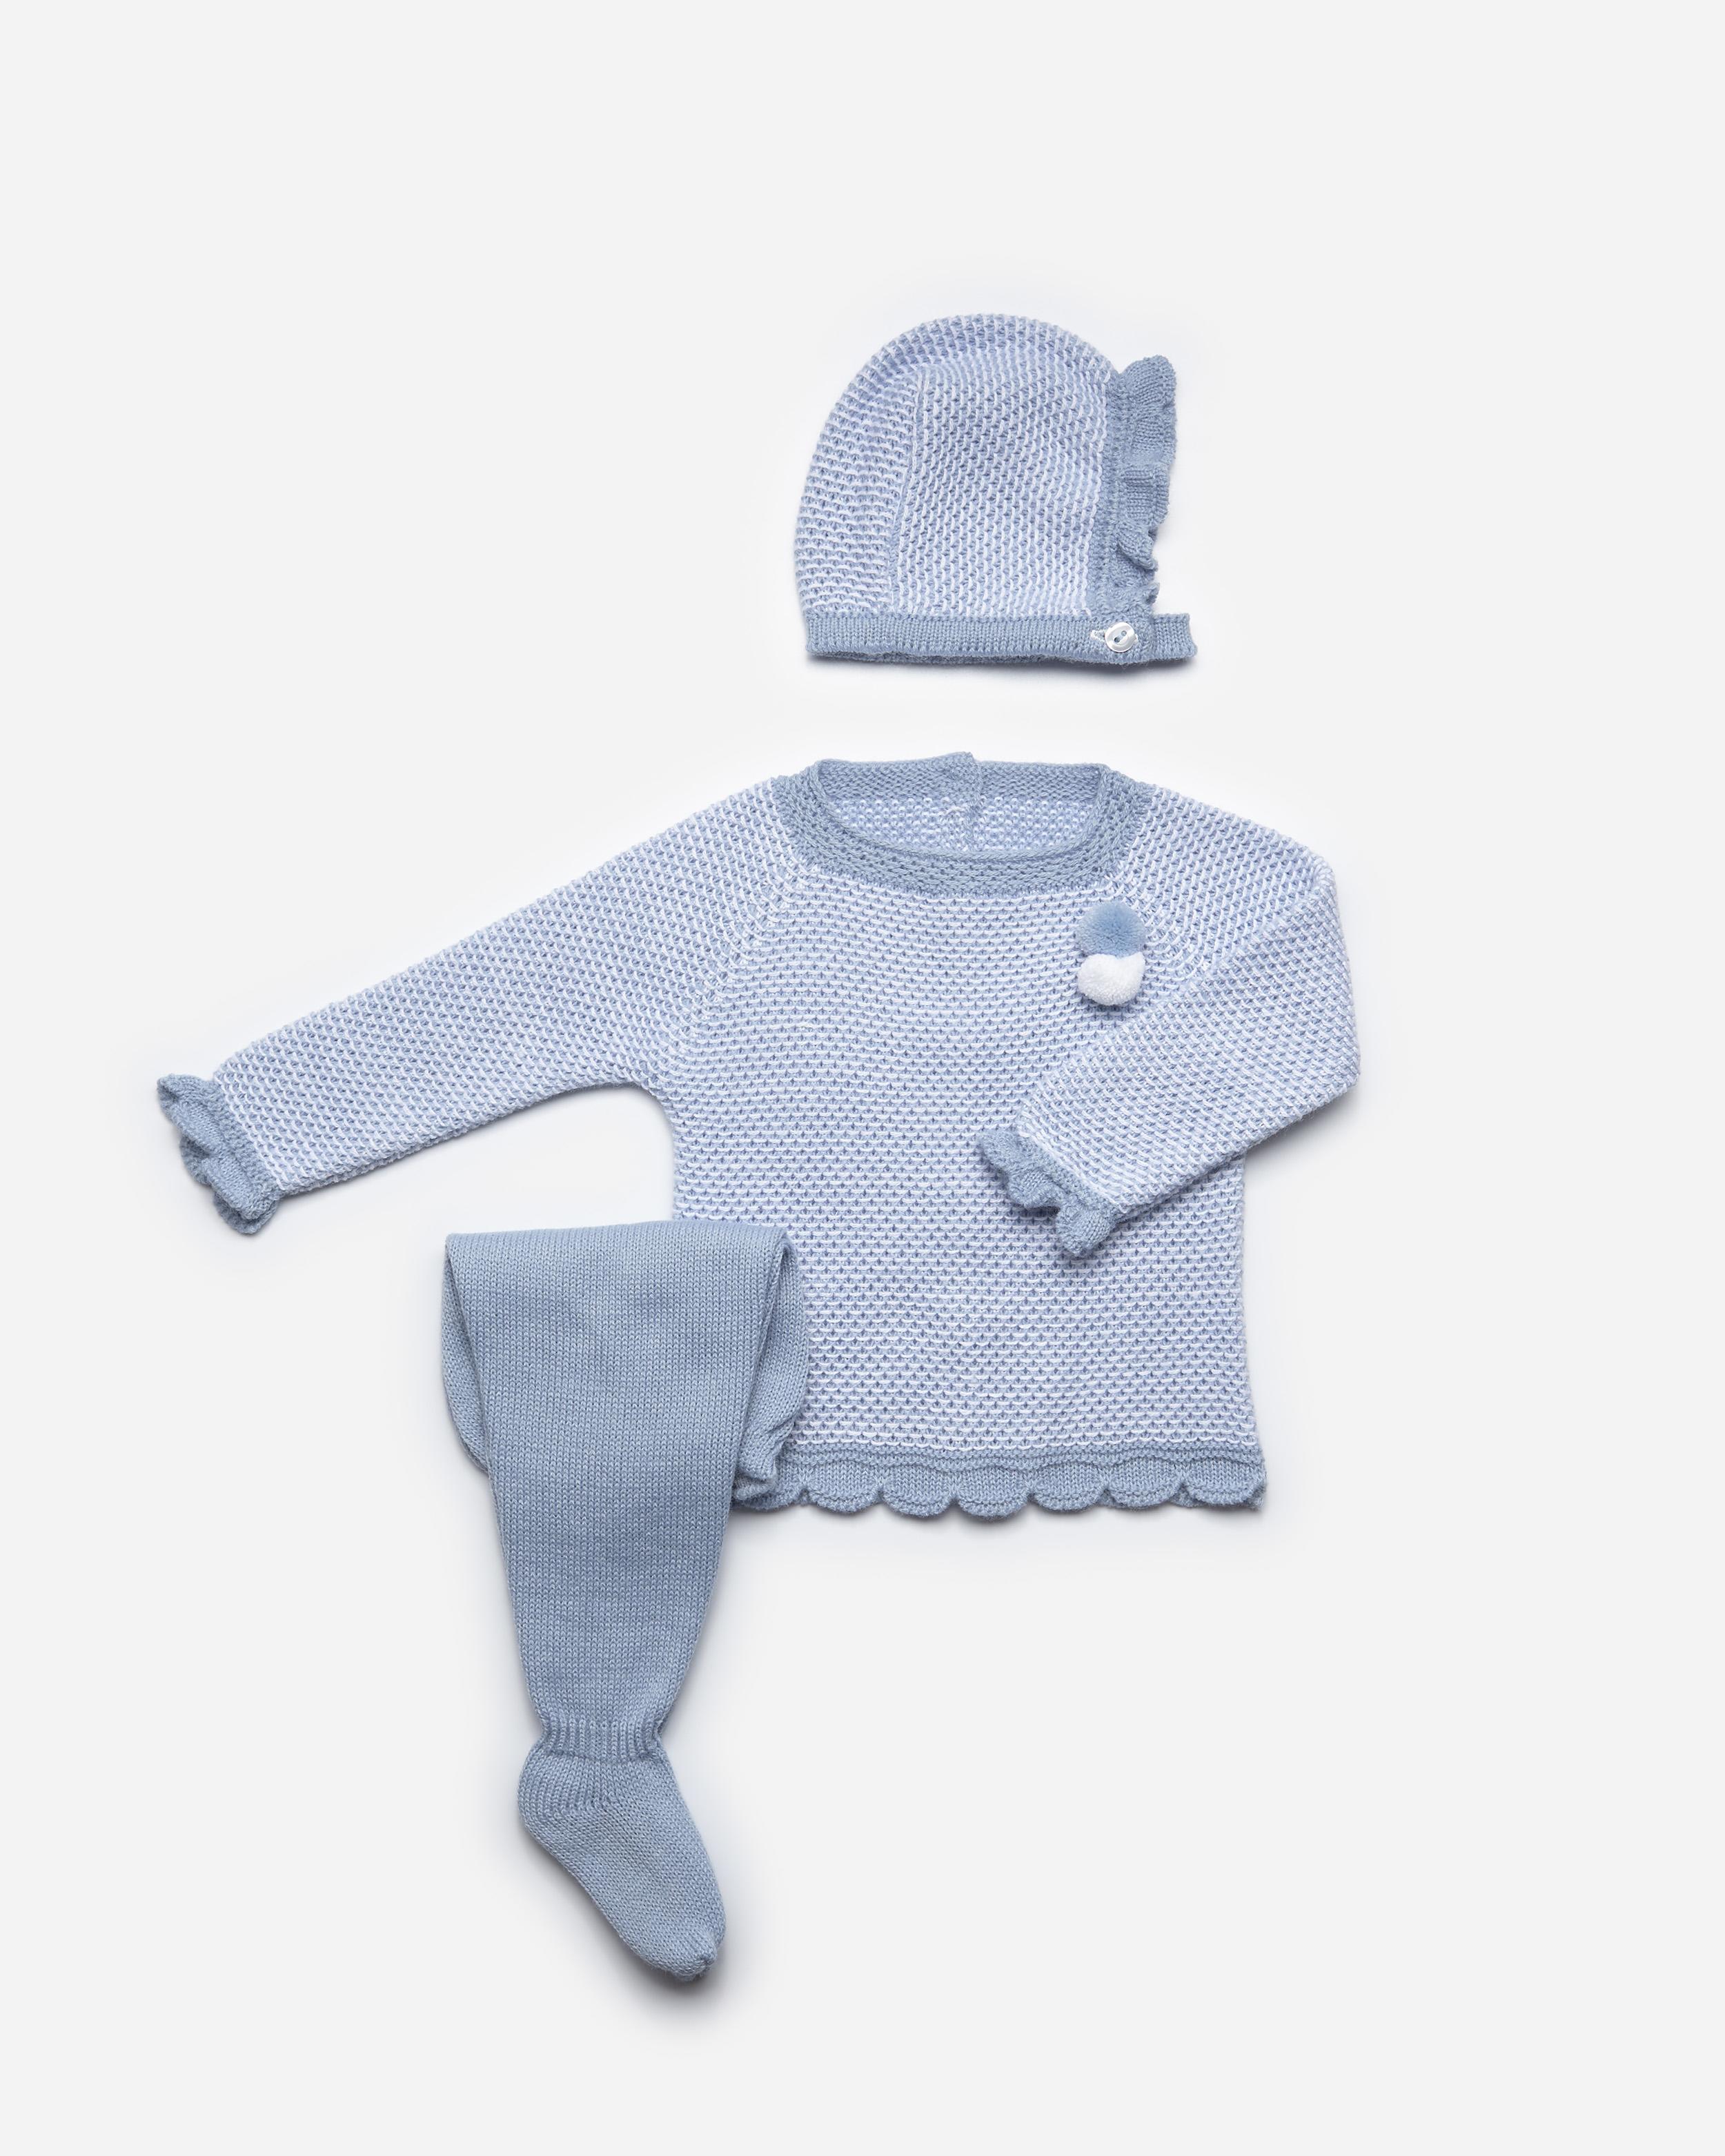 Blue knitted leggings jumper set with bonnet hat in same pattern. Pom Pom detail on the front of the jumper